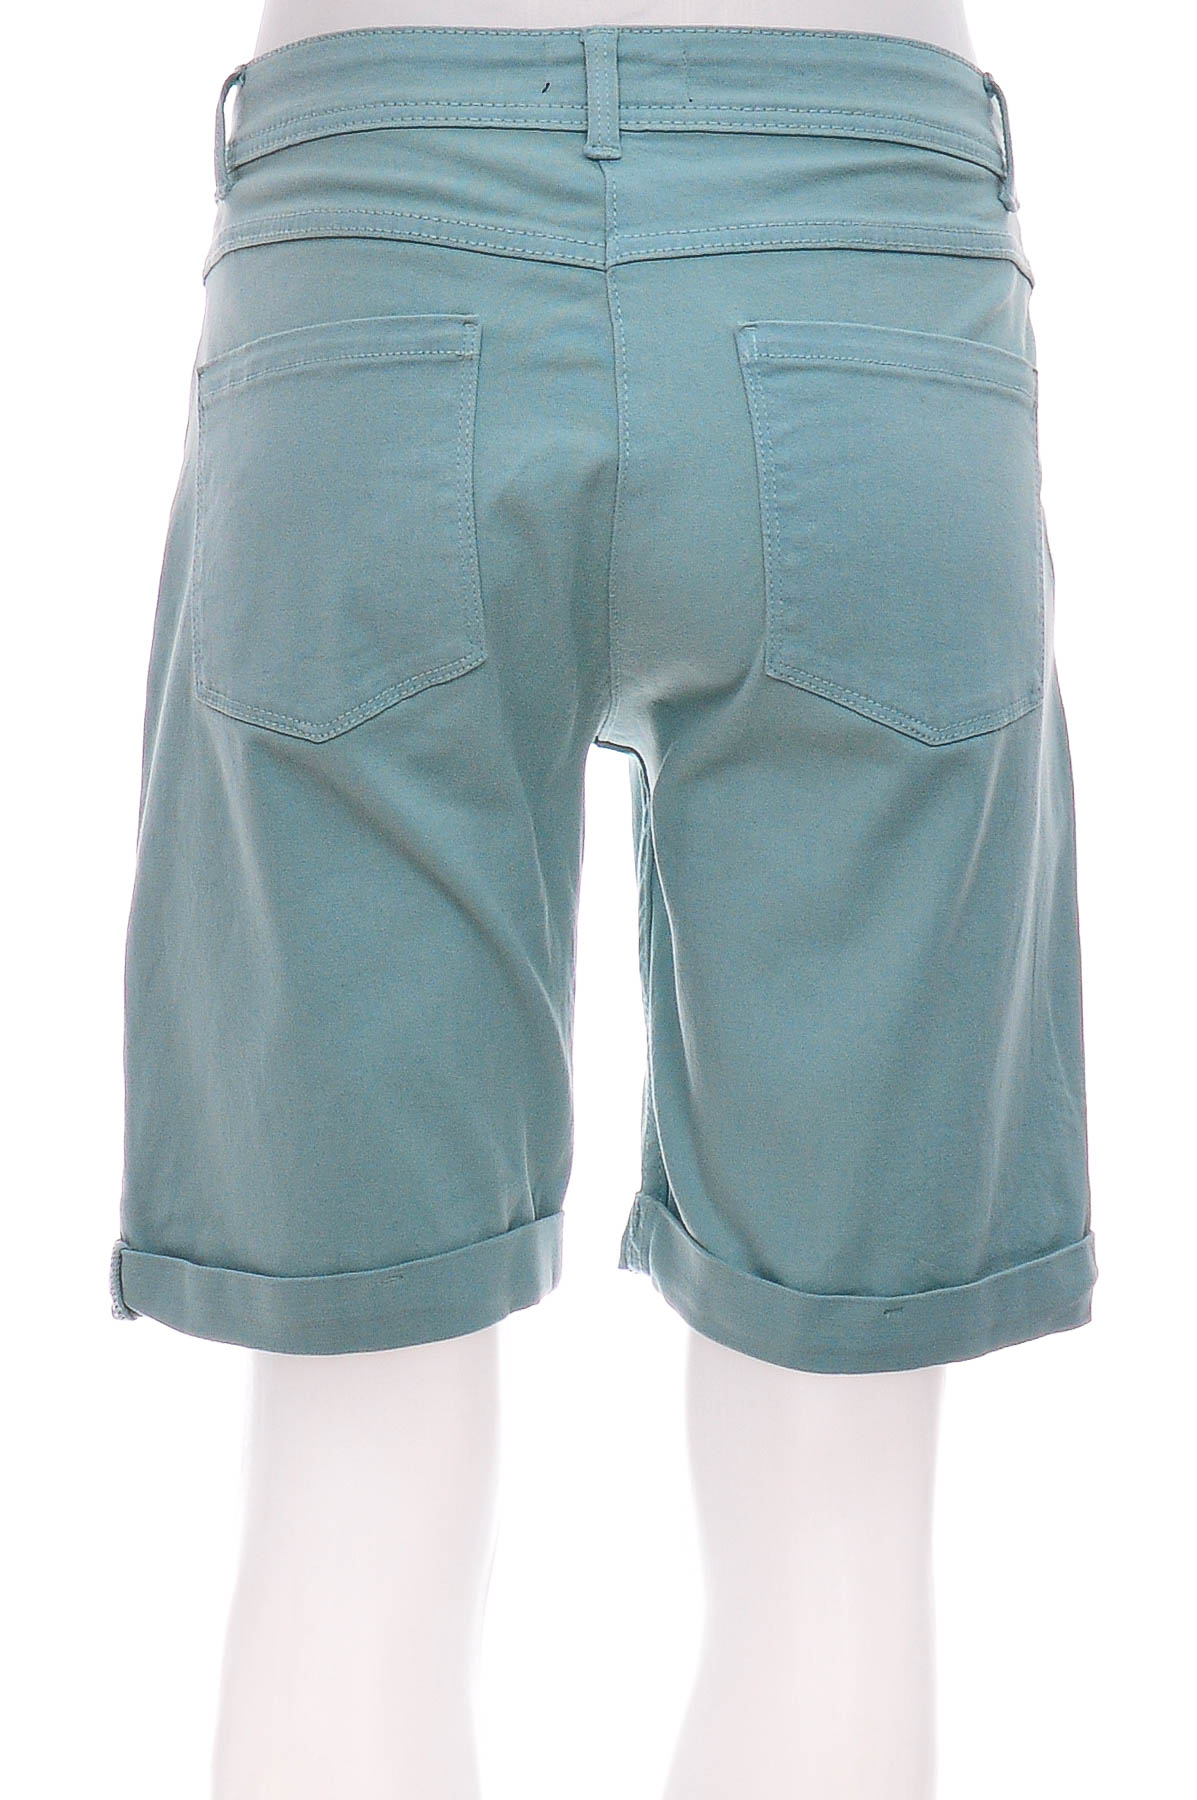 Men's shorts - Up 2 Fashion - 1